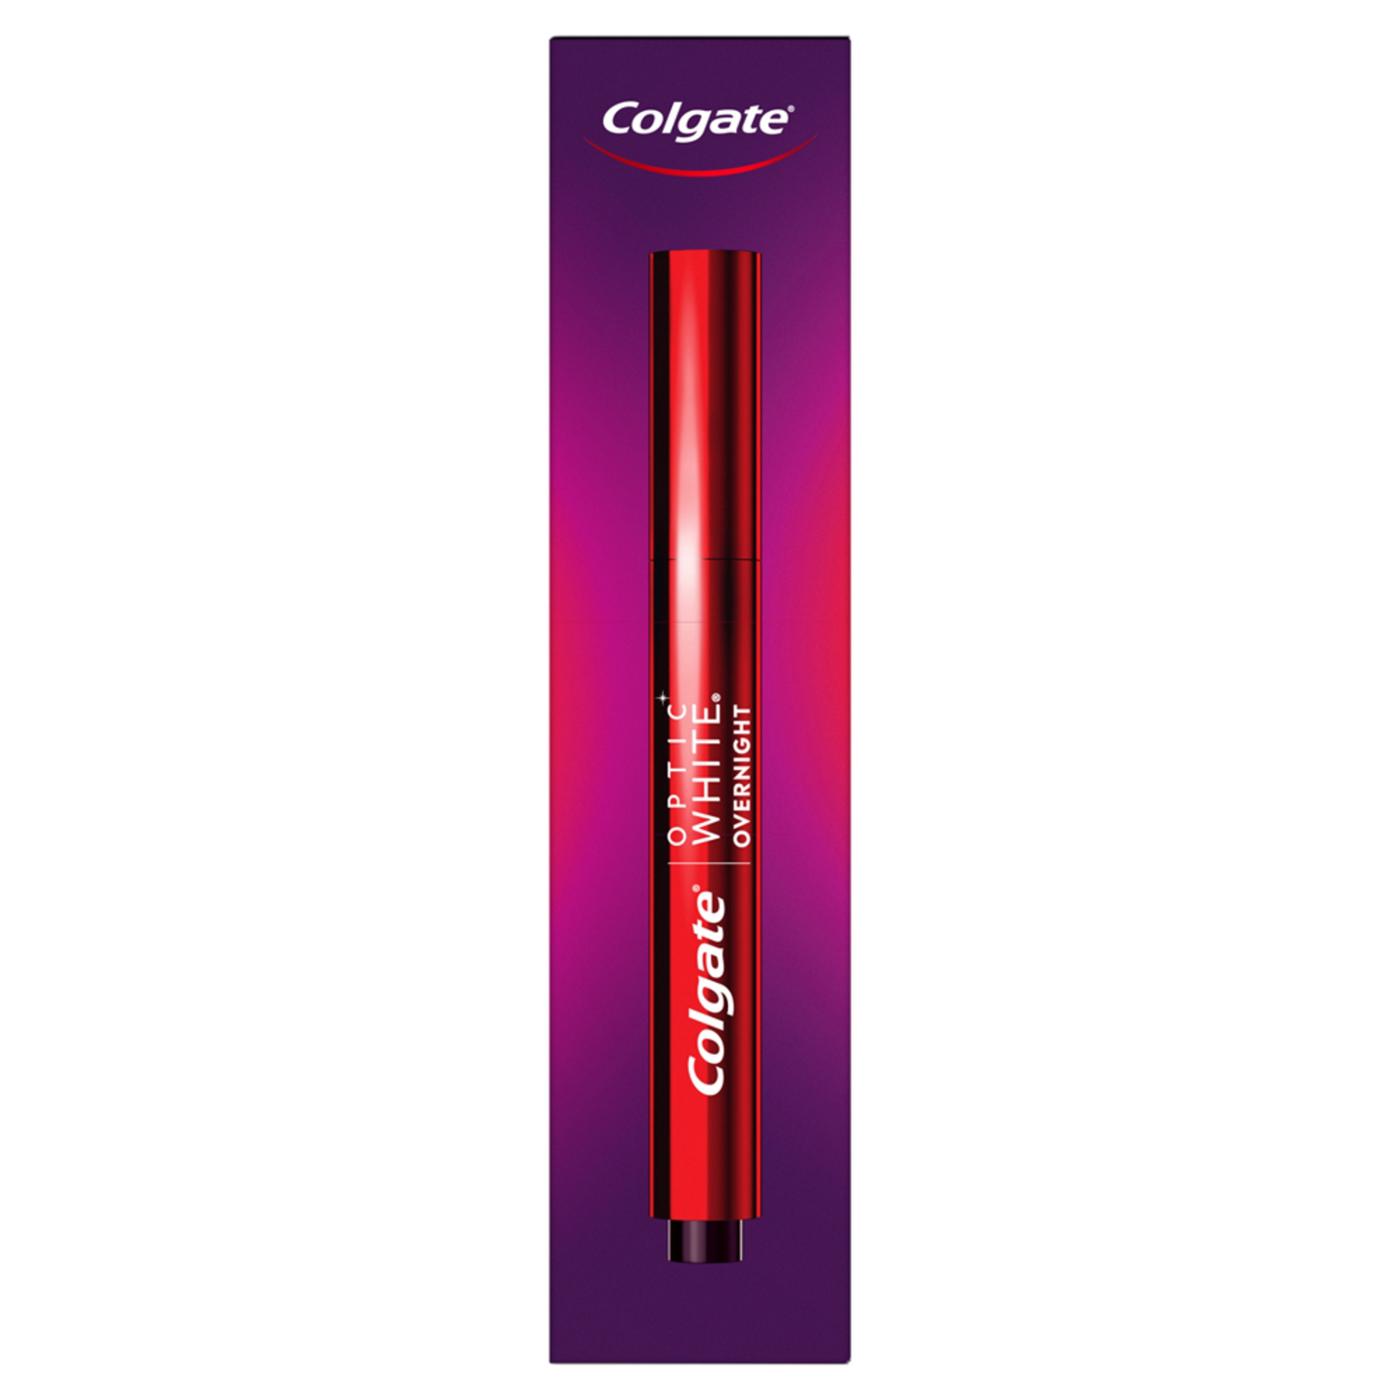 Colgate Optic White Overnight Teeth Whitening Pen; image 6 of 10